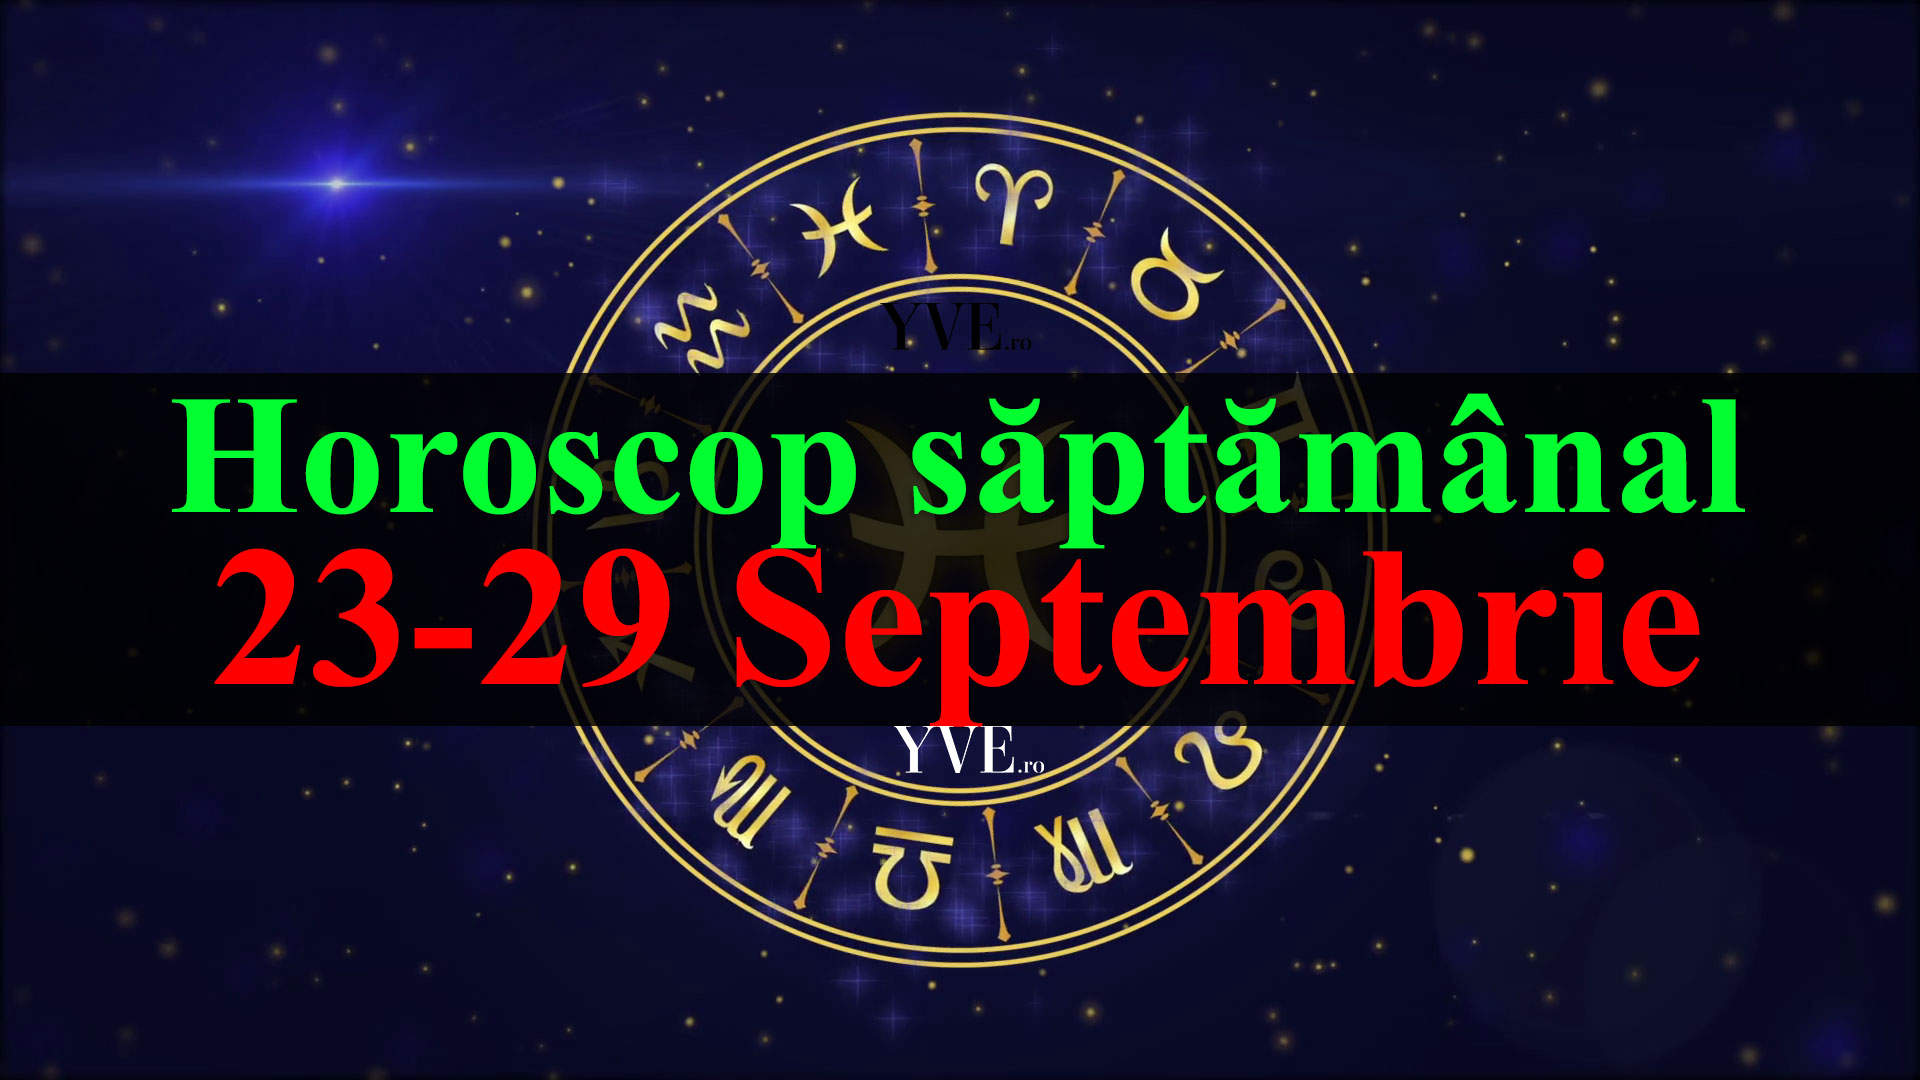 Horoscop saptamanal 23-29 Septembrie 2019